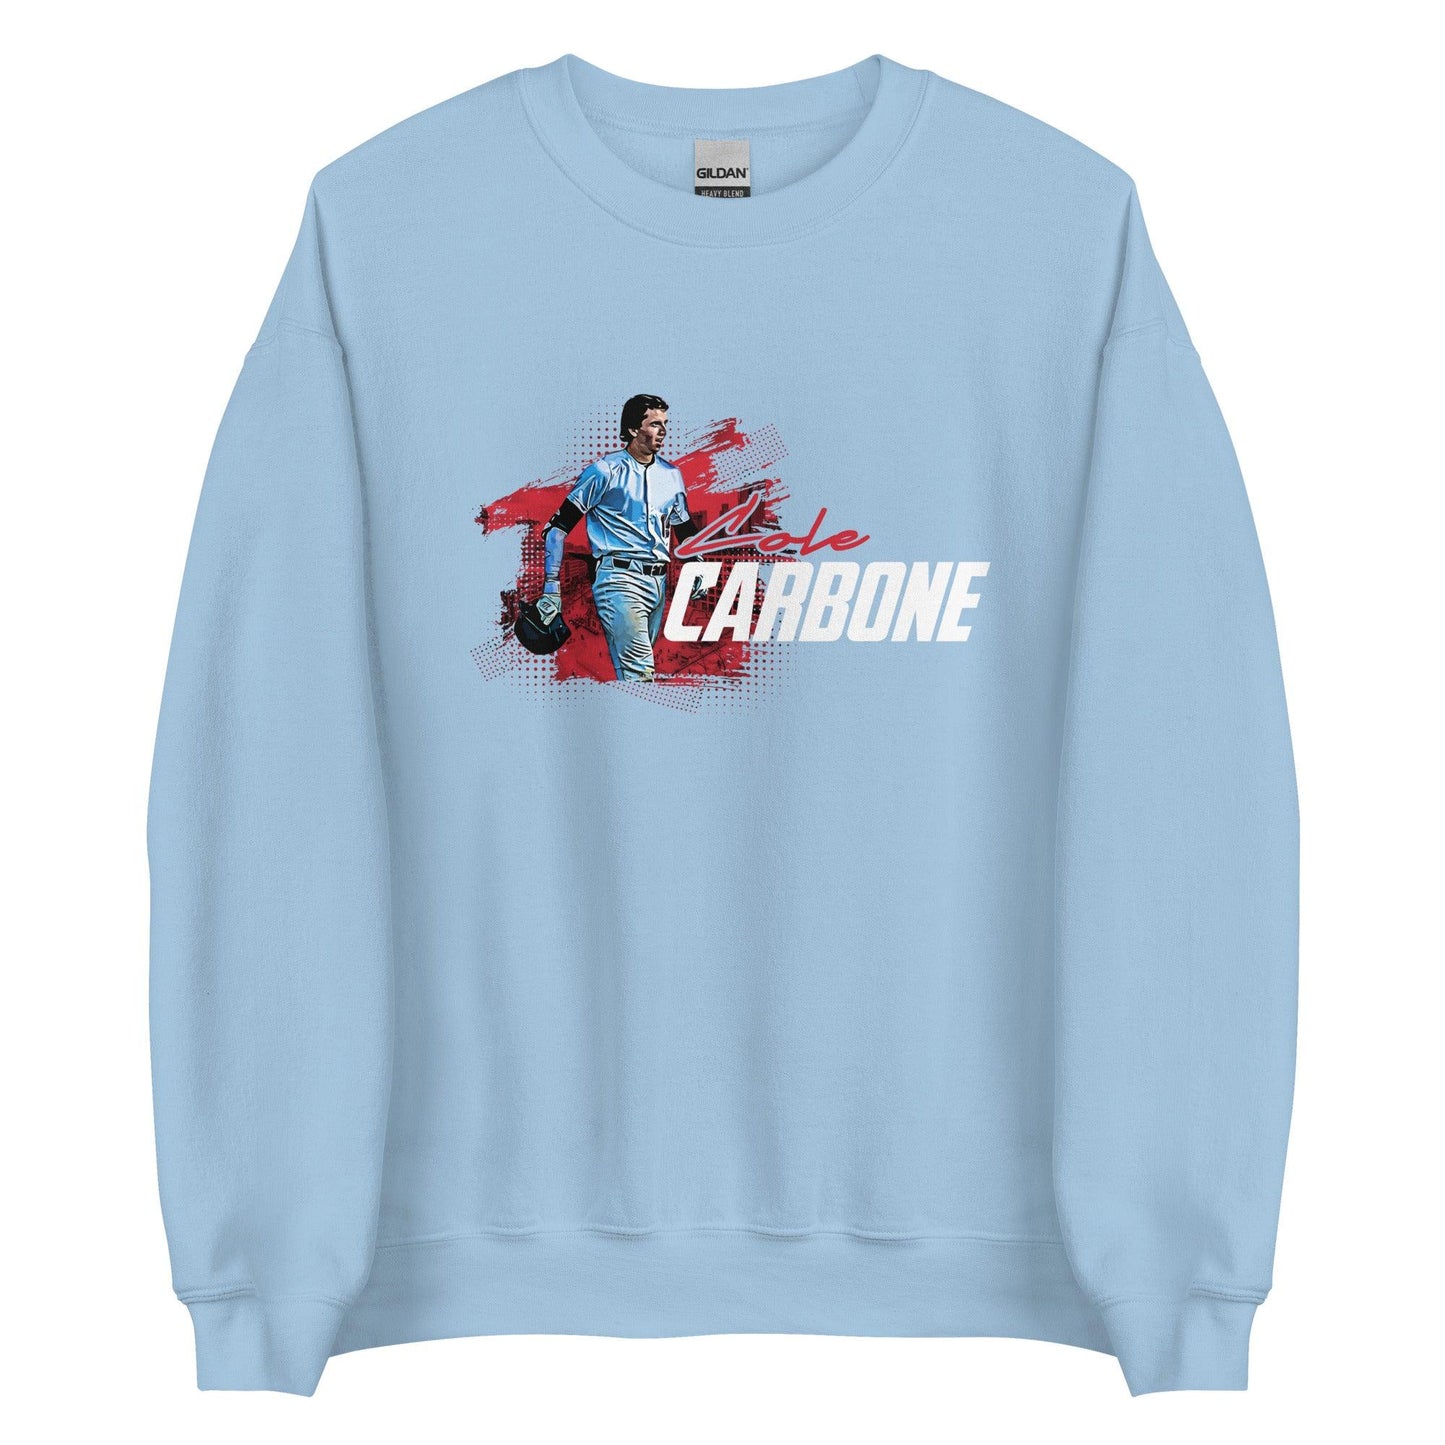 Cole Carbone "Gameday" Sweatshirt - Fan Arch